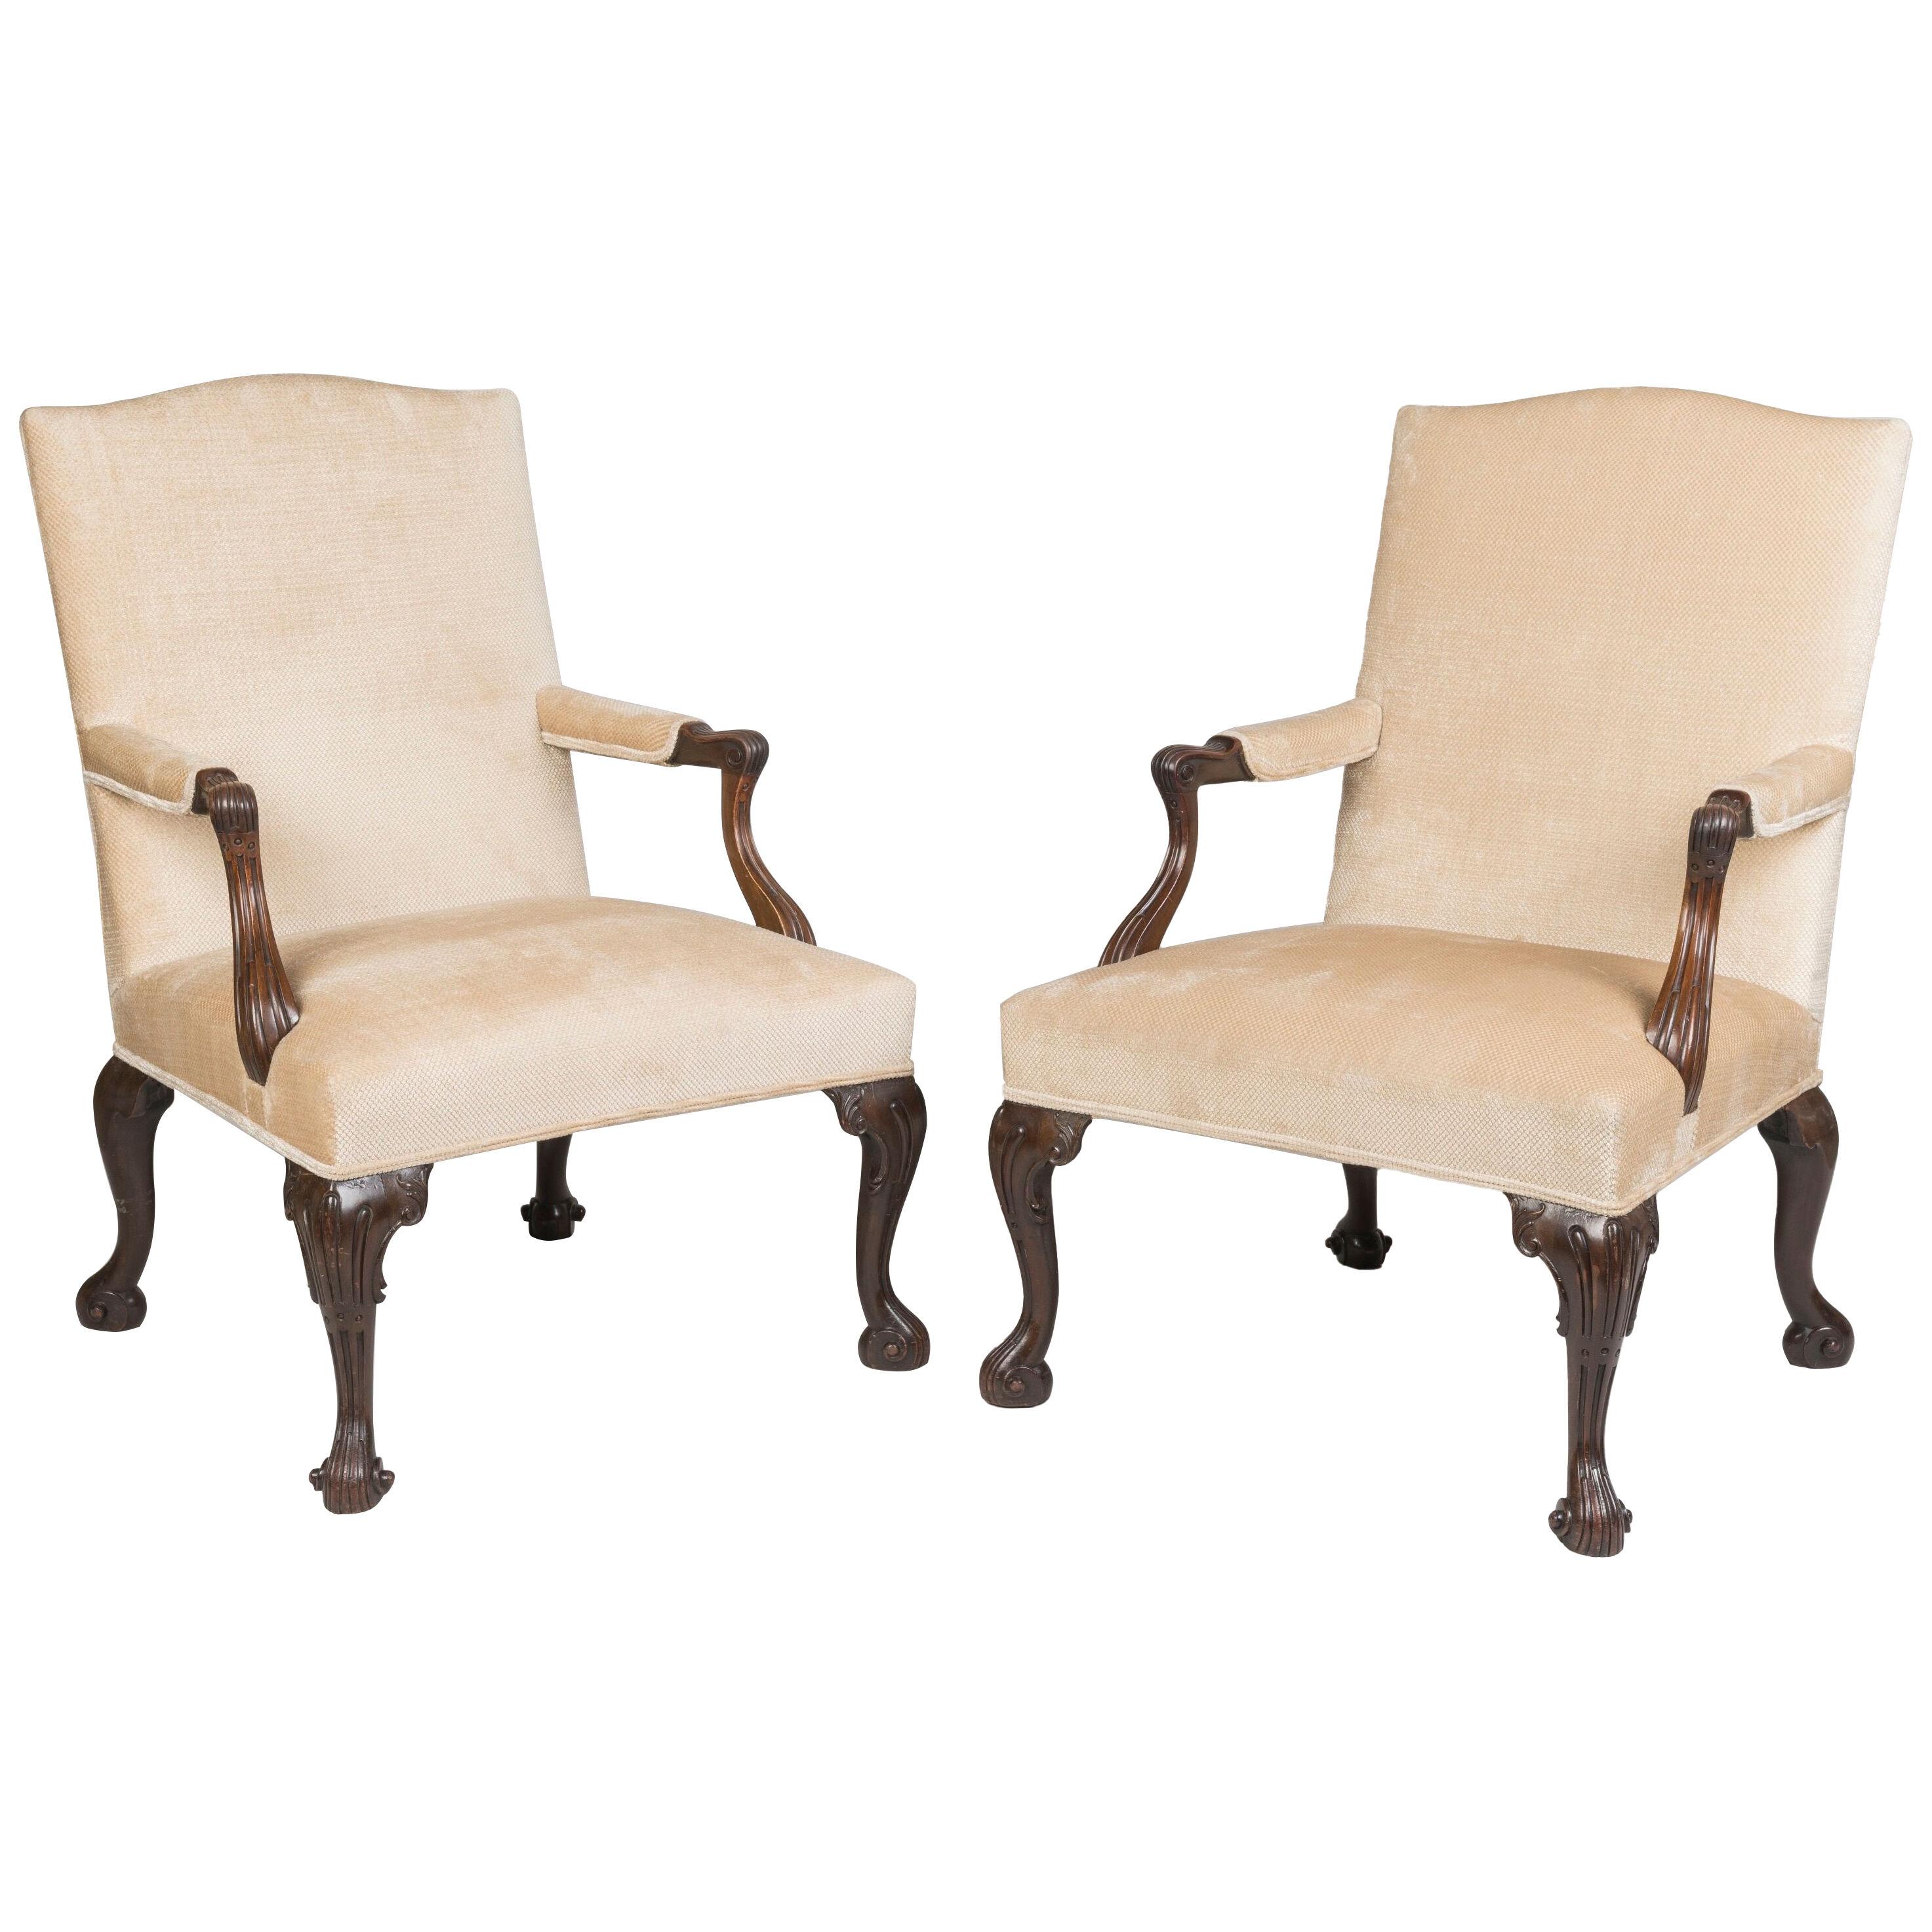 Pair of Upholstered Mahogany Gainsborough Chairs